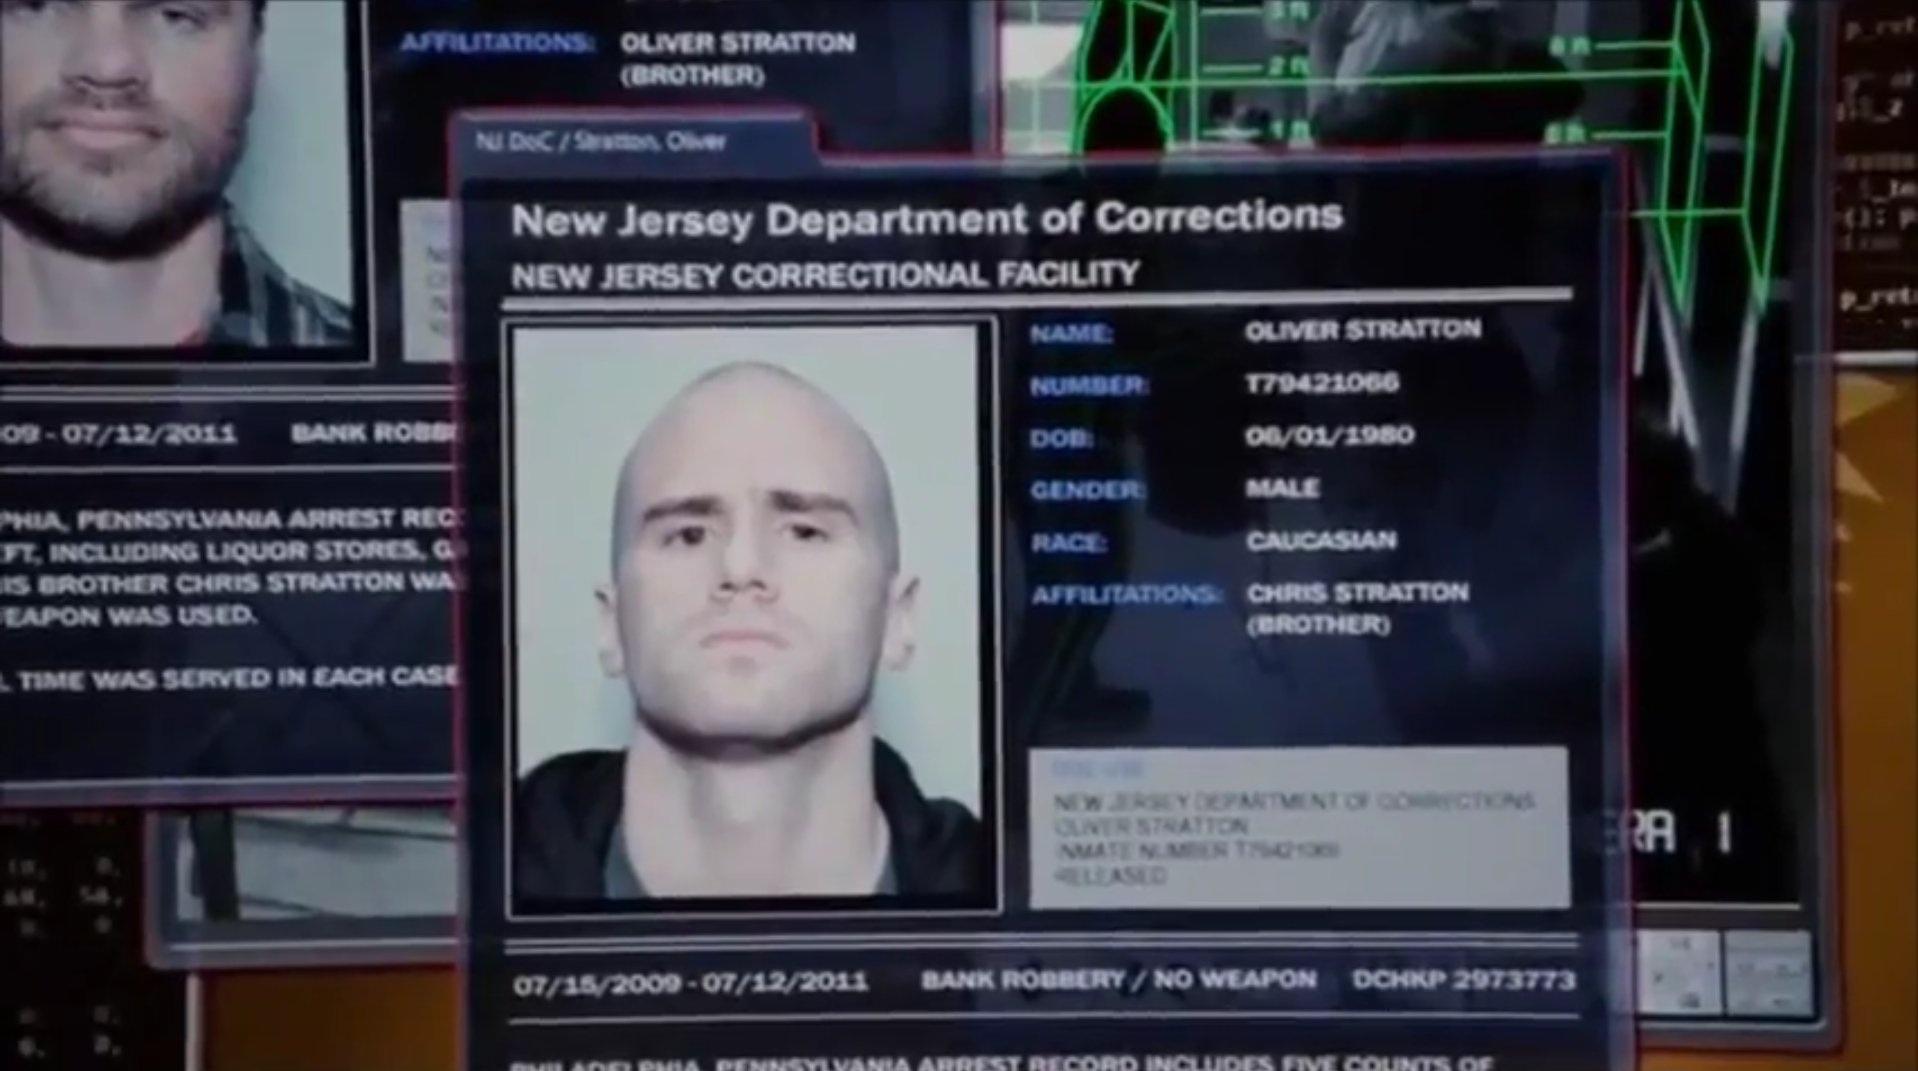 Bank robber Oliver Stratton (Center) played by Seth Laird. Criminal Minds Season 7 Episode 23